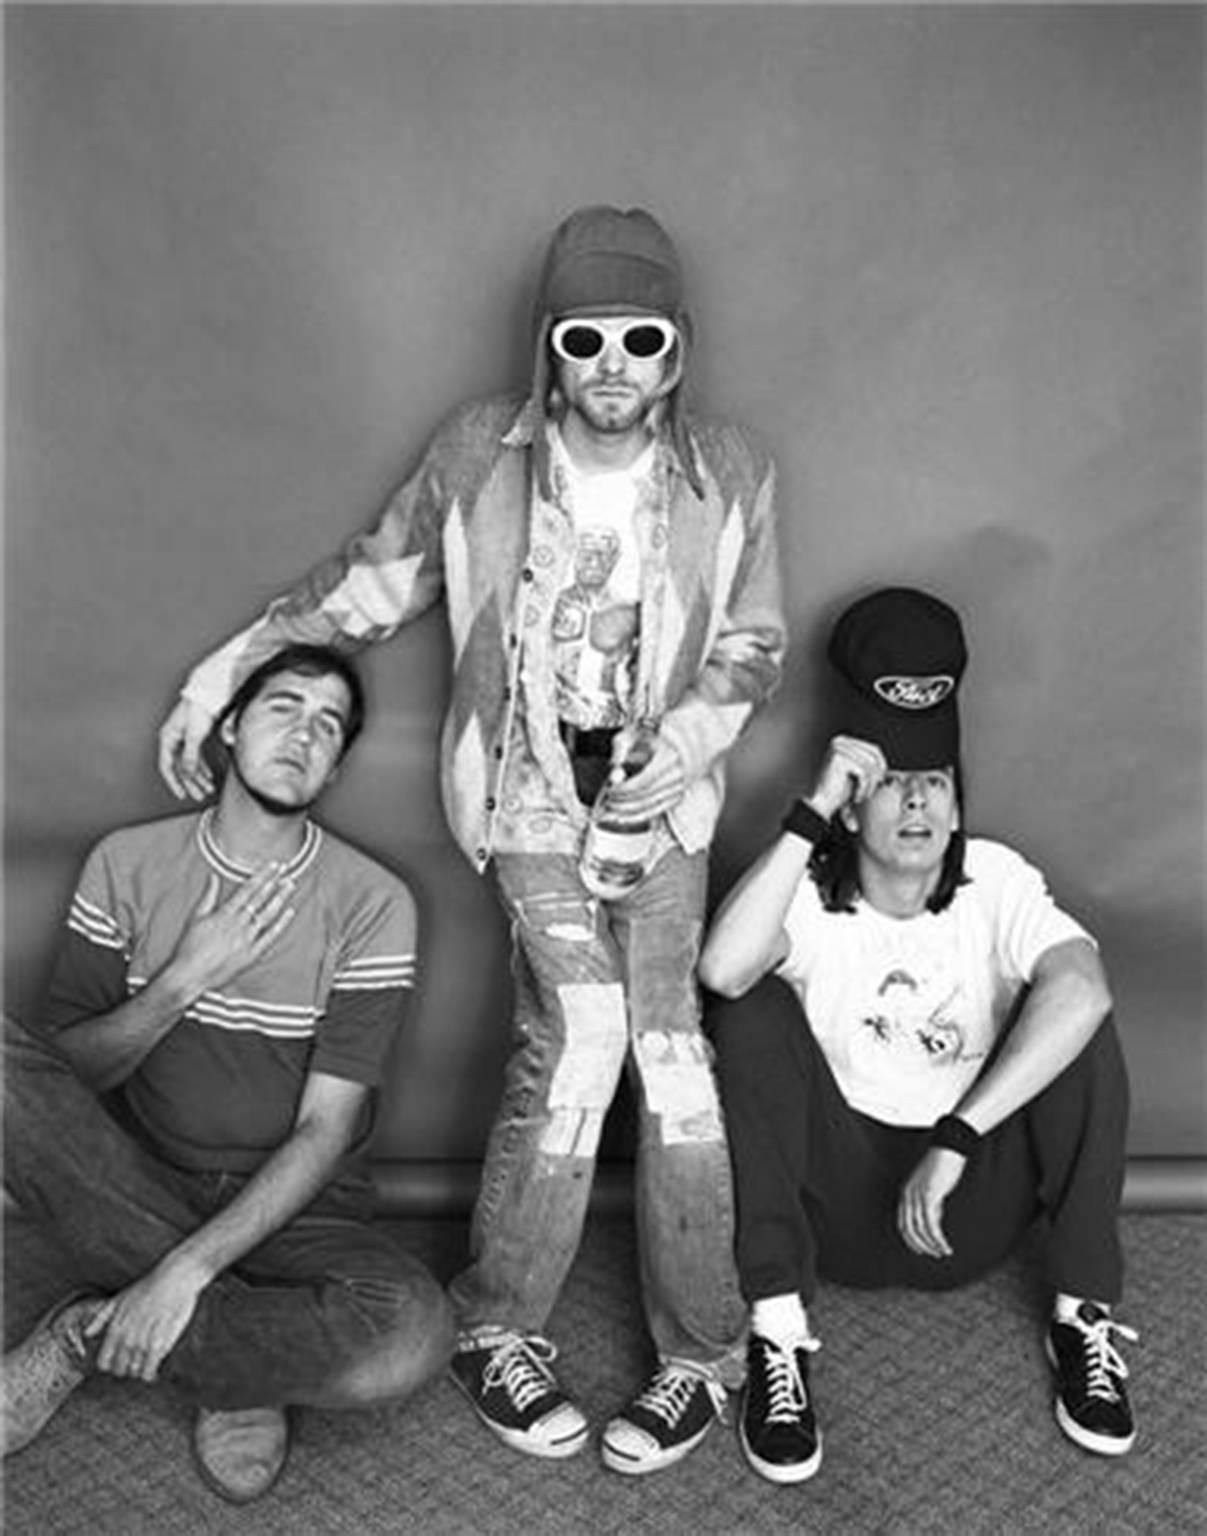 Jesse Frohman Black and White Photograph - Nirvana "B"